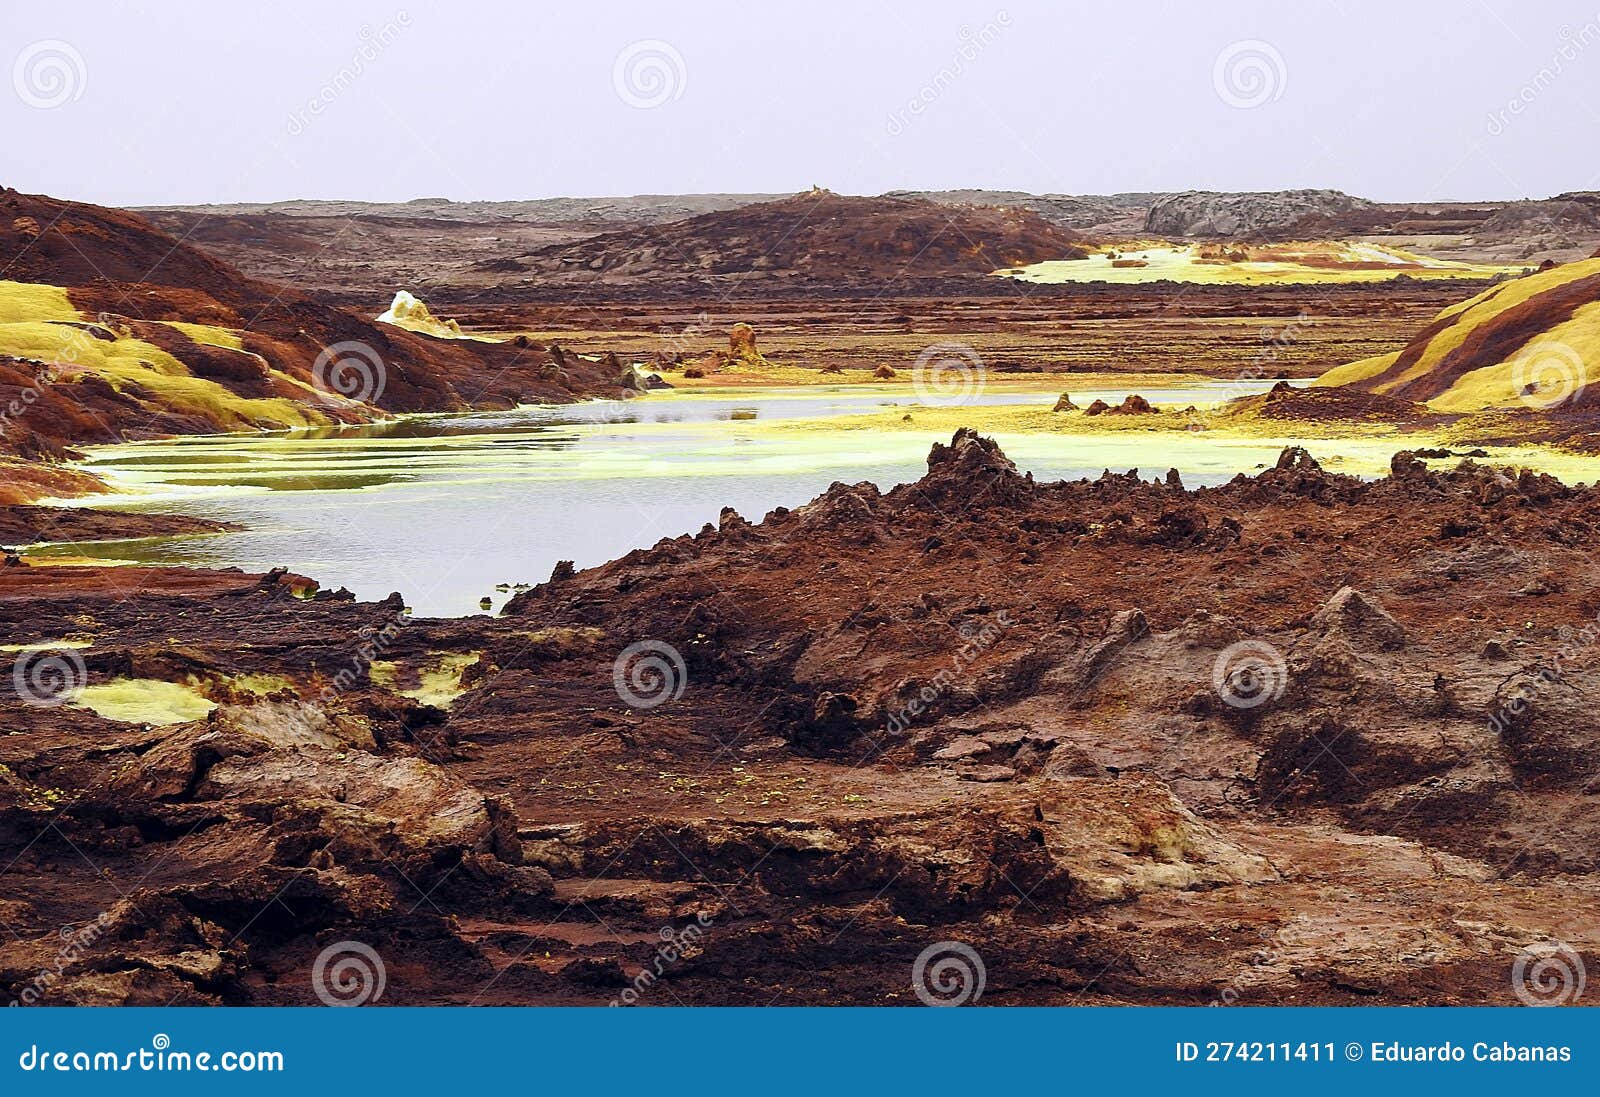 landscape of the danakil depression, azar region, ethiopia